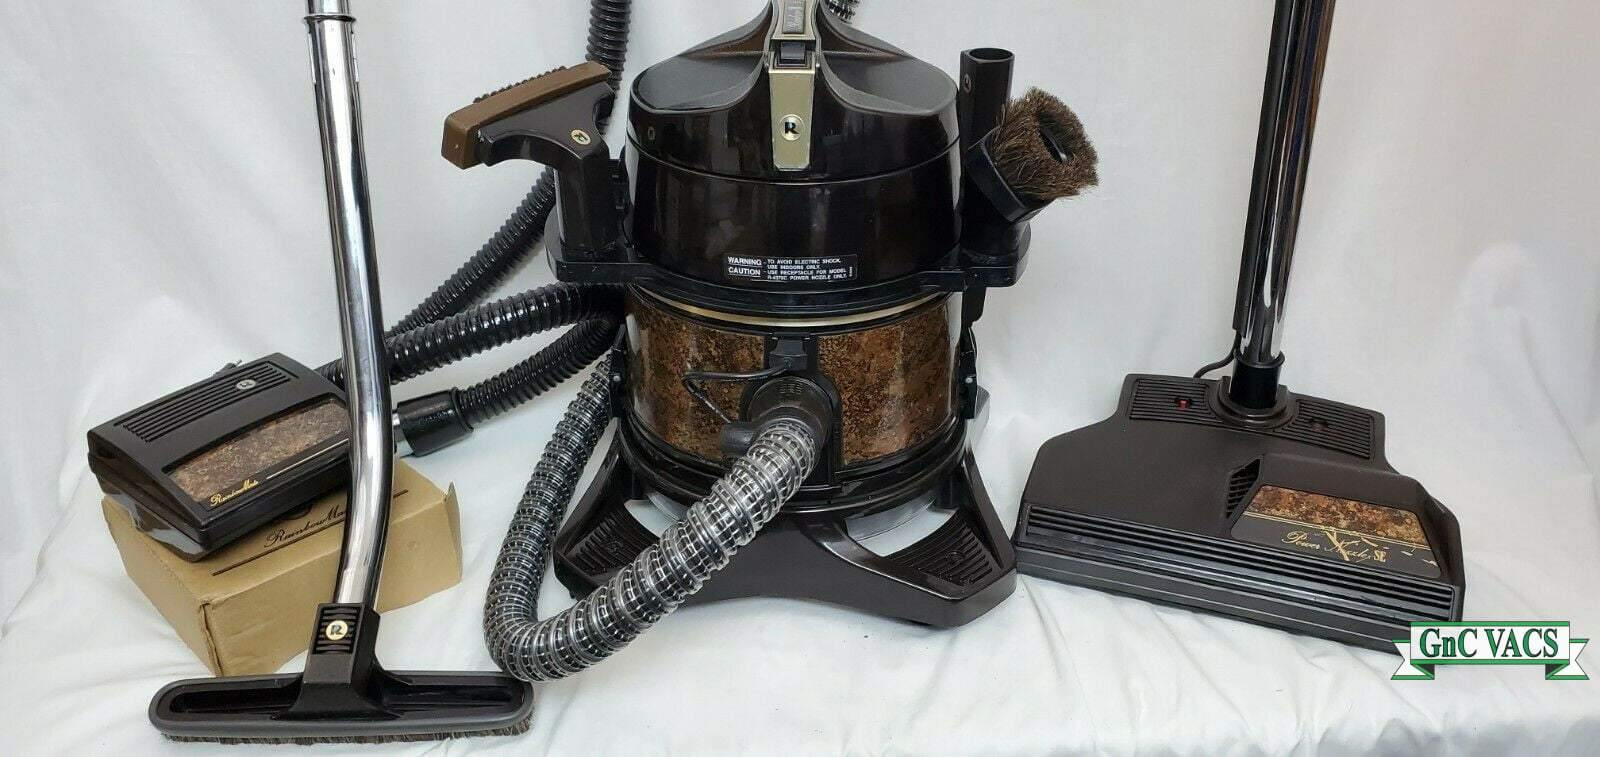 Rainbow D4 Se Pe Vacuum Cleaner With Mate Gnc Vacs Inc